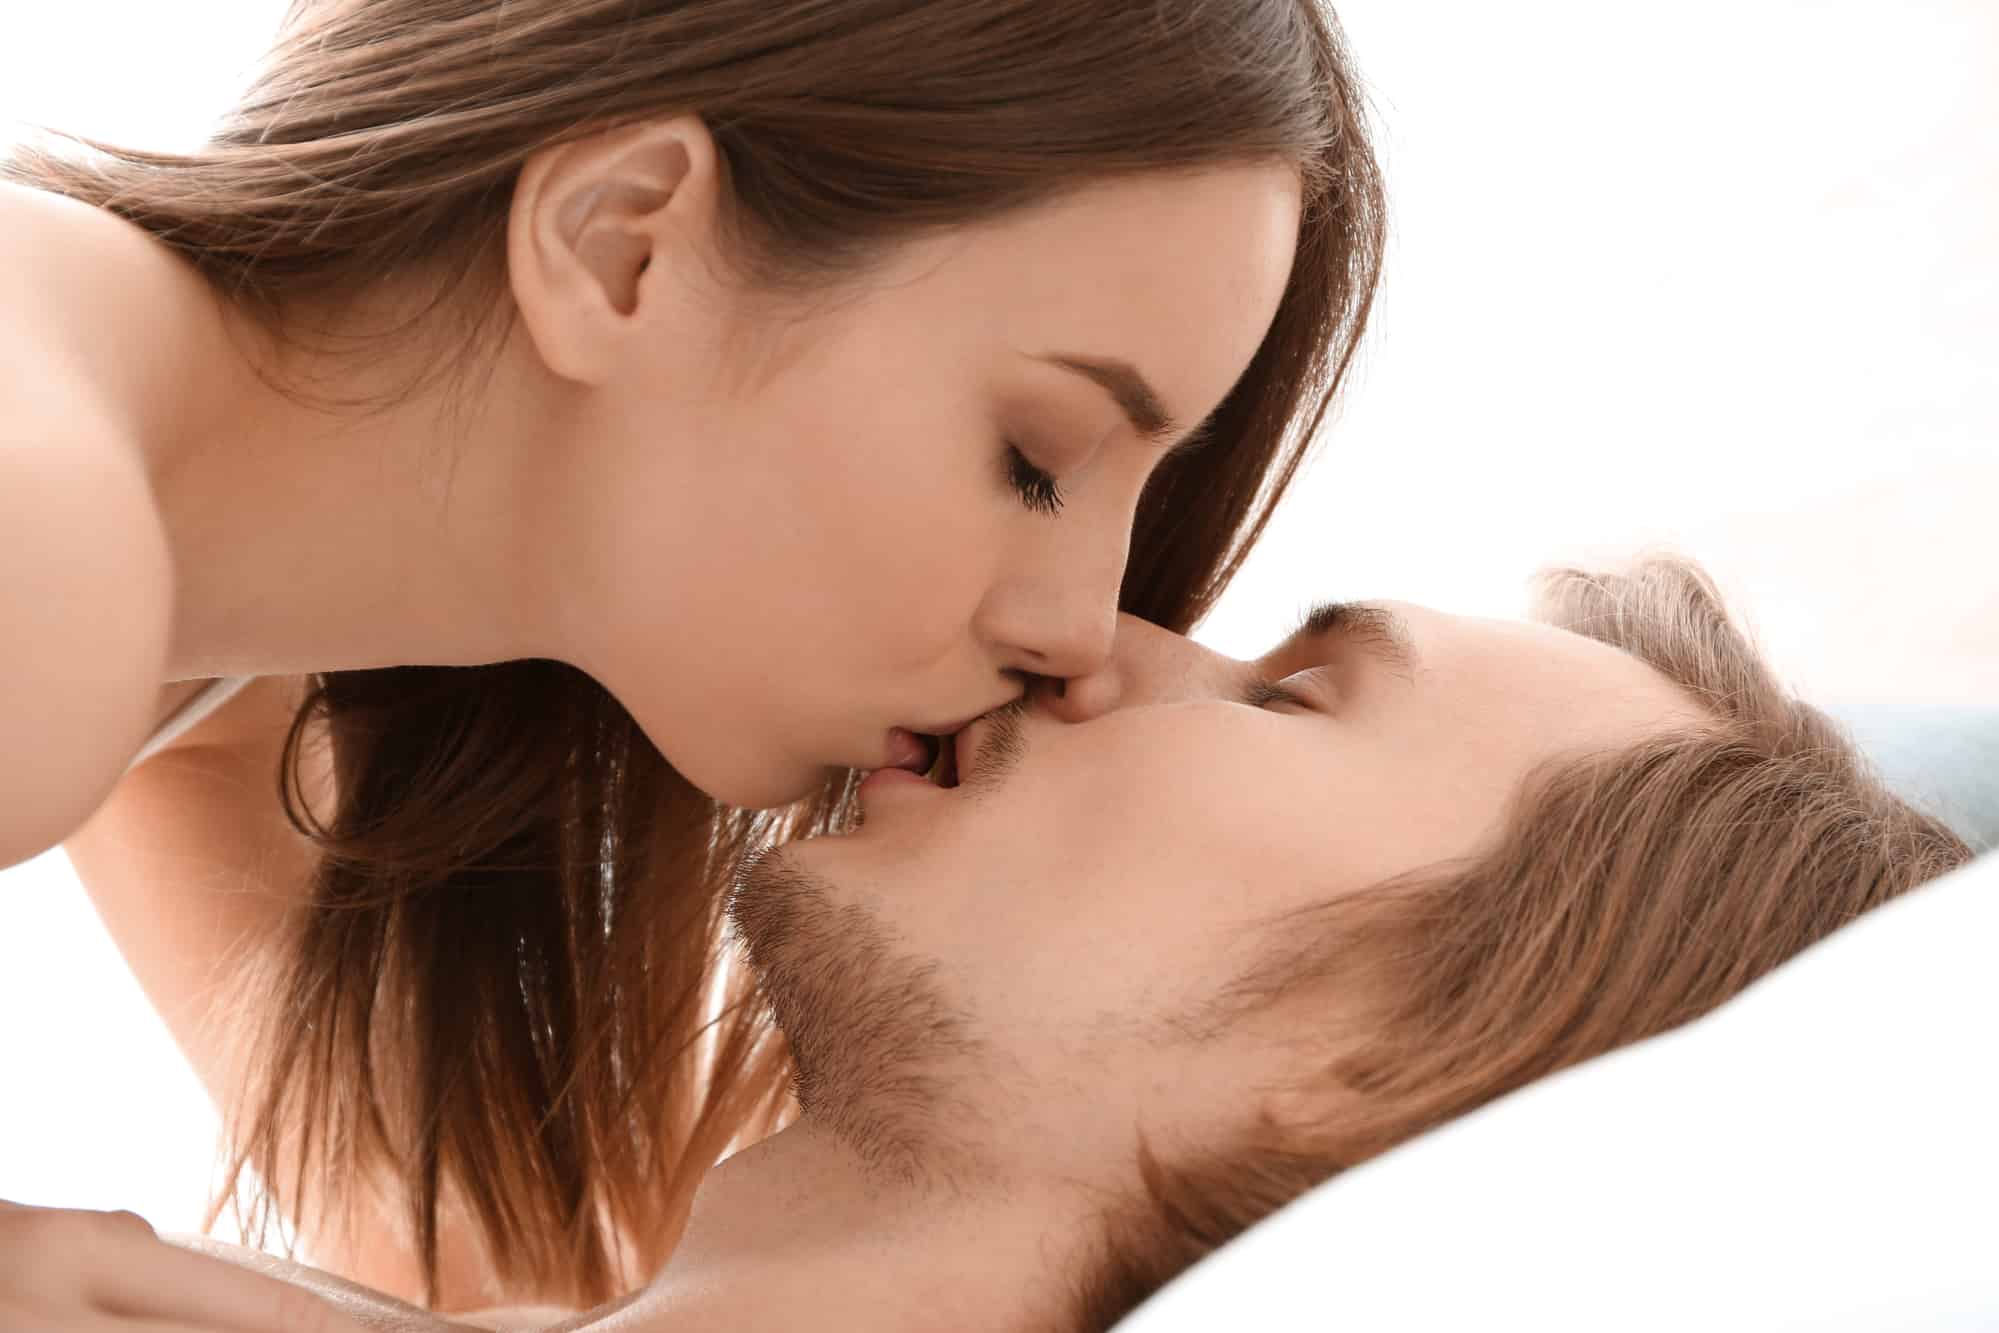 How to make passionate kiss